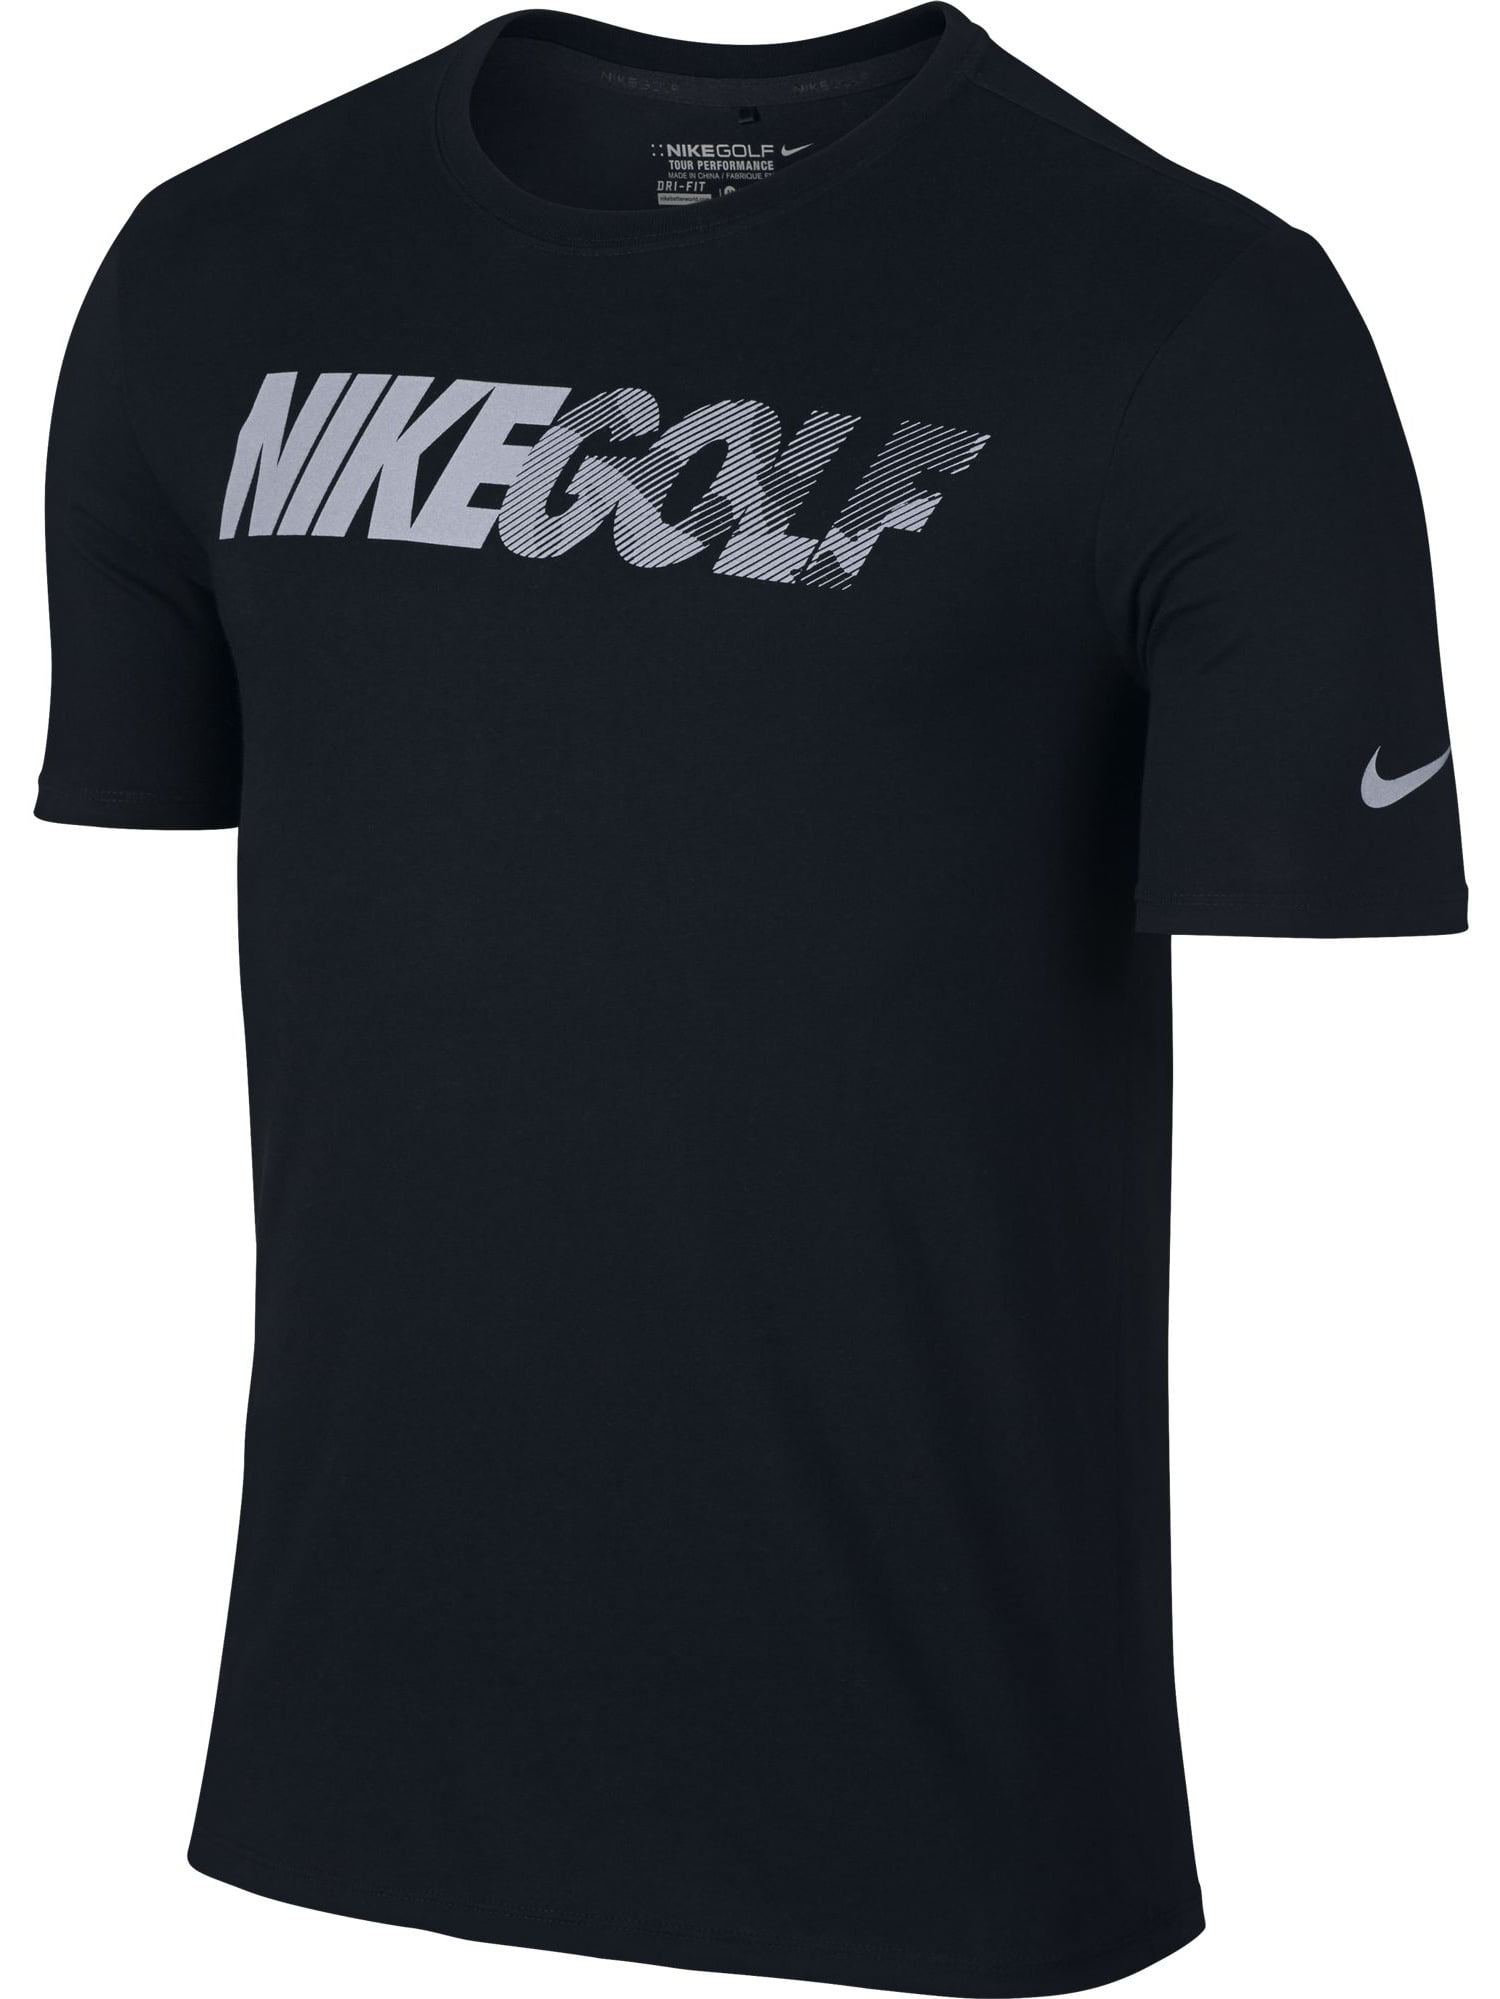 anything Lean manly NEW Nike Golf Graphic Tee Black/Reflective Silver Medium Golf T-Shirt -  Walmart.com